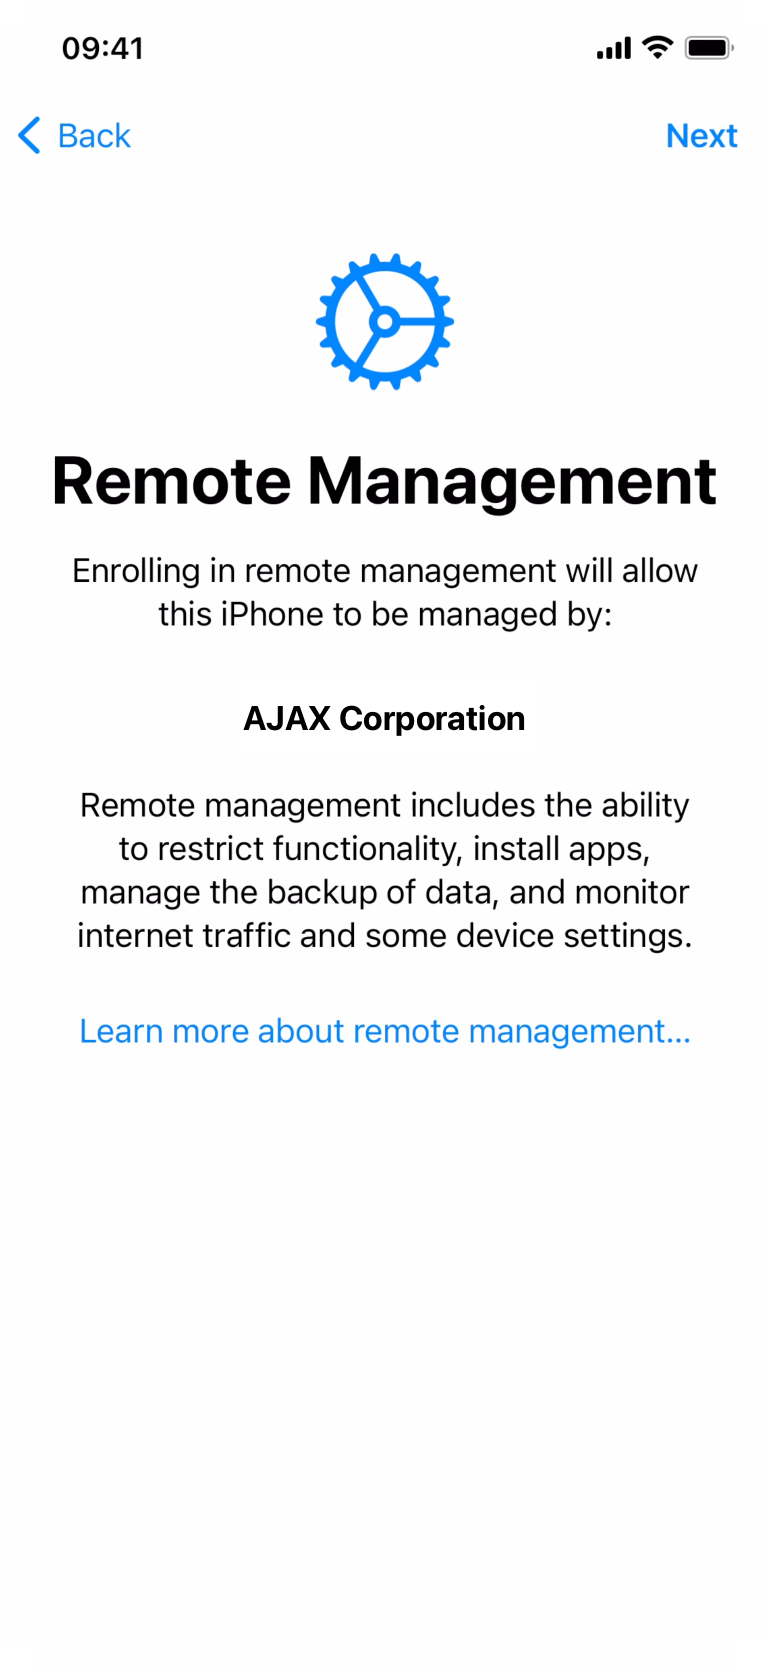 Remote Management window in iOS